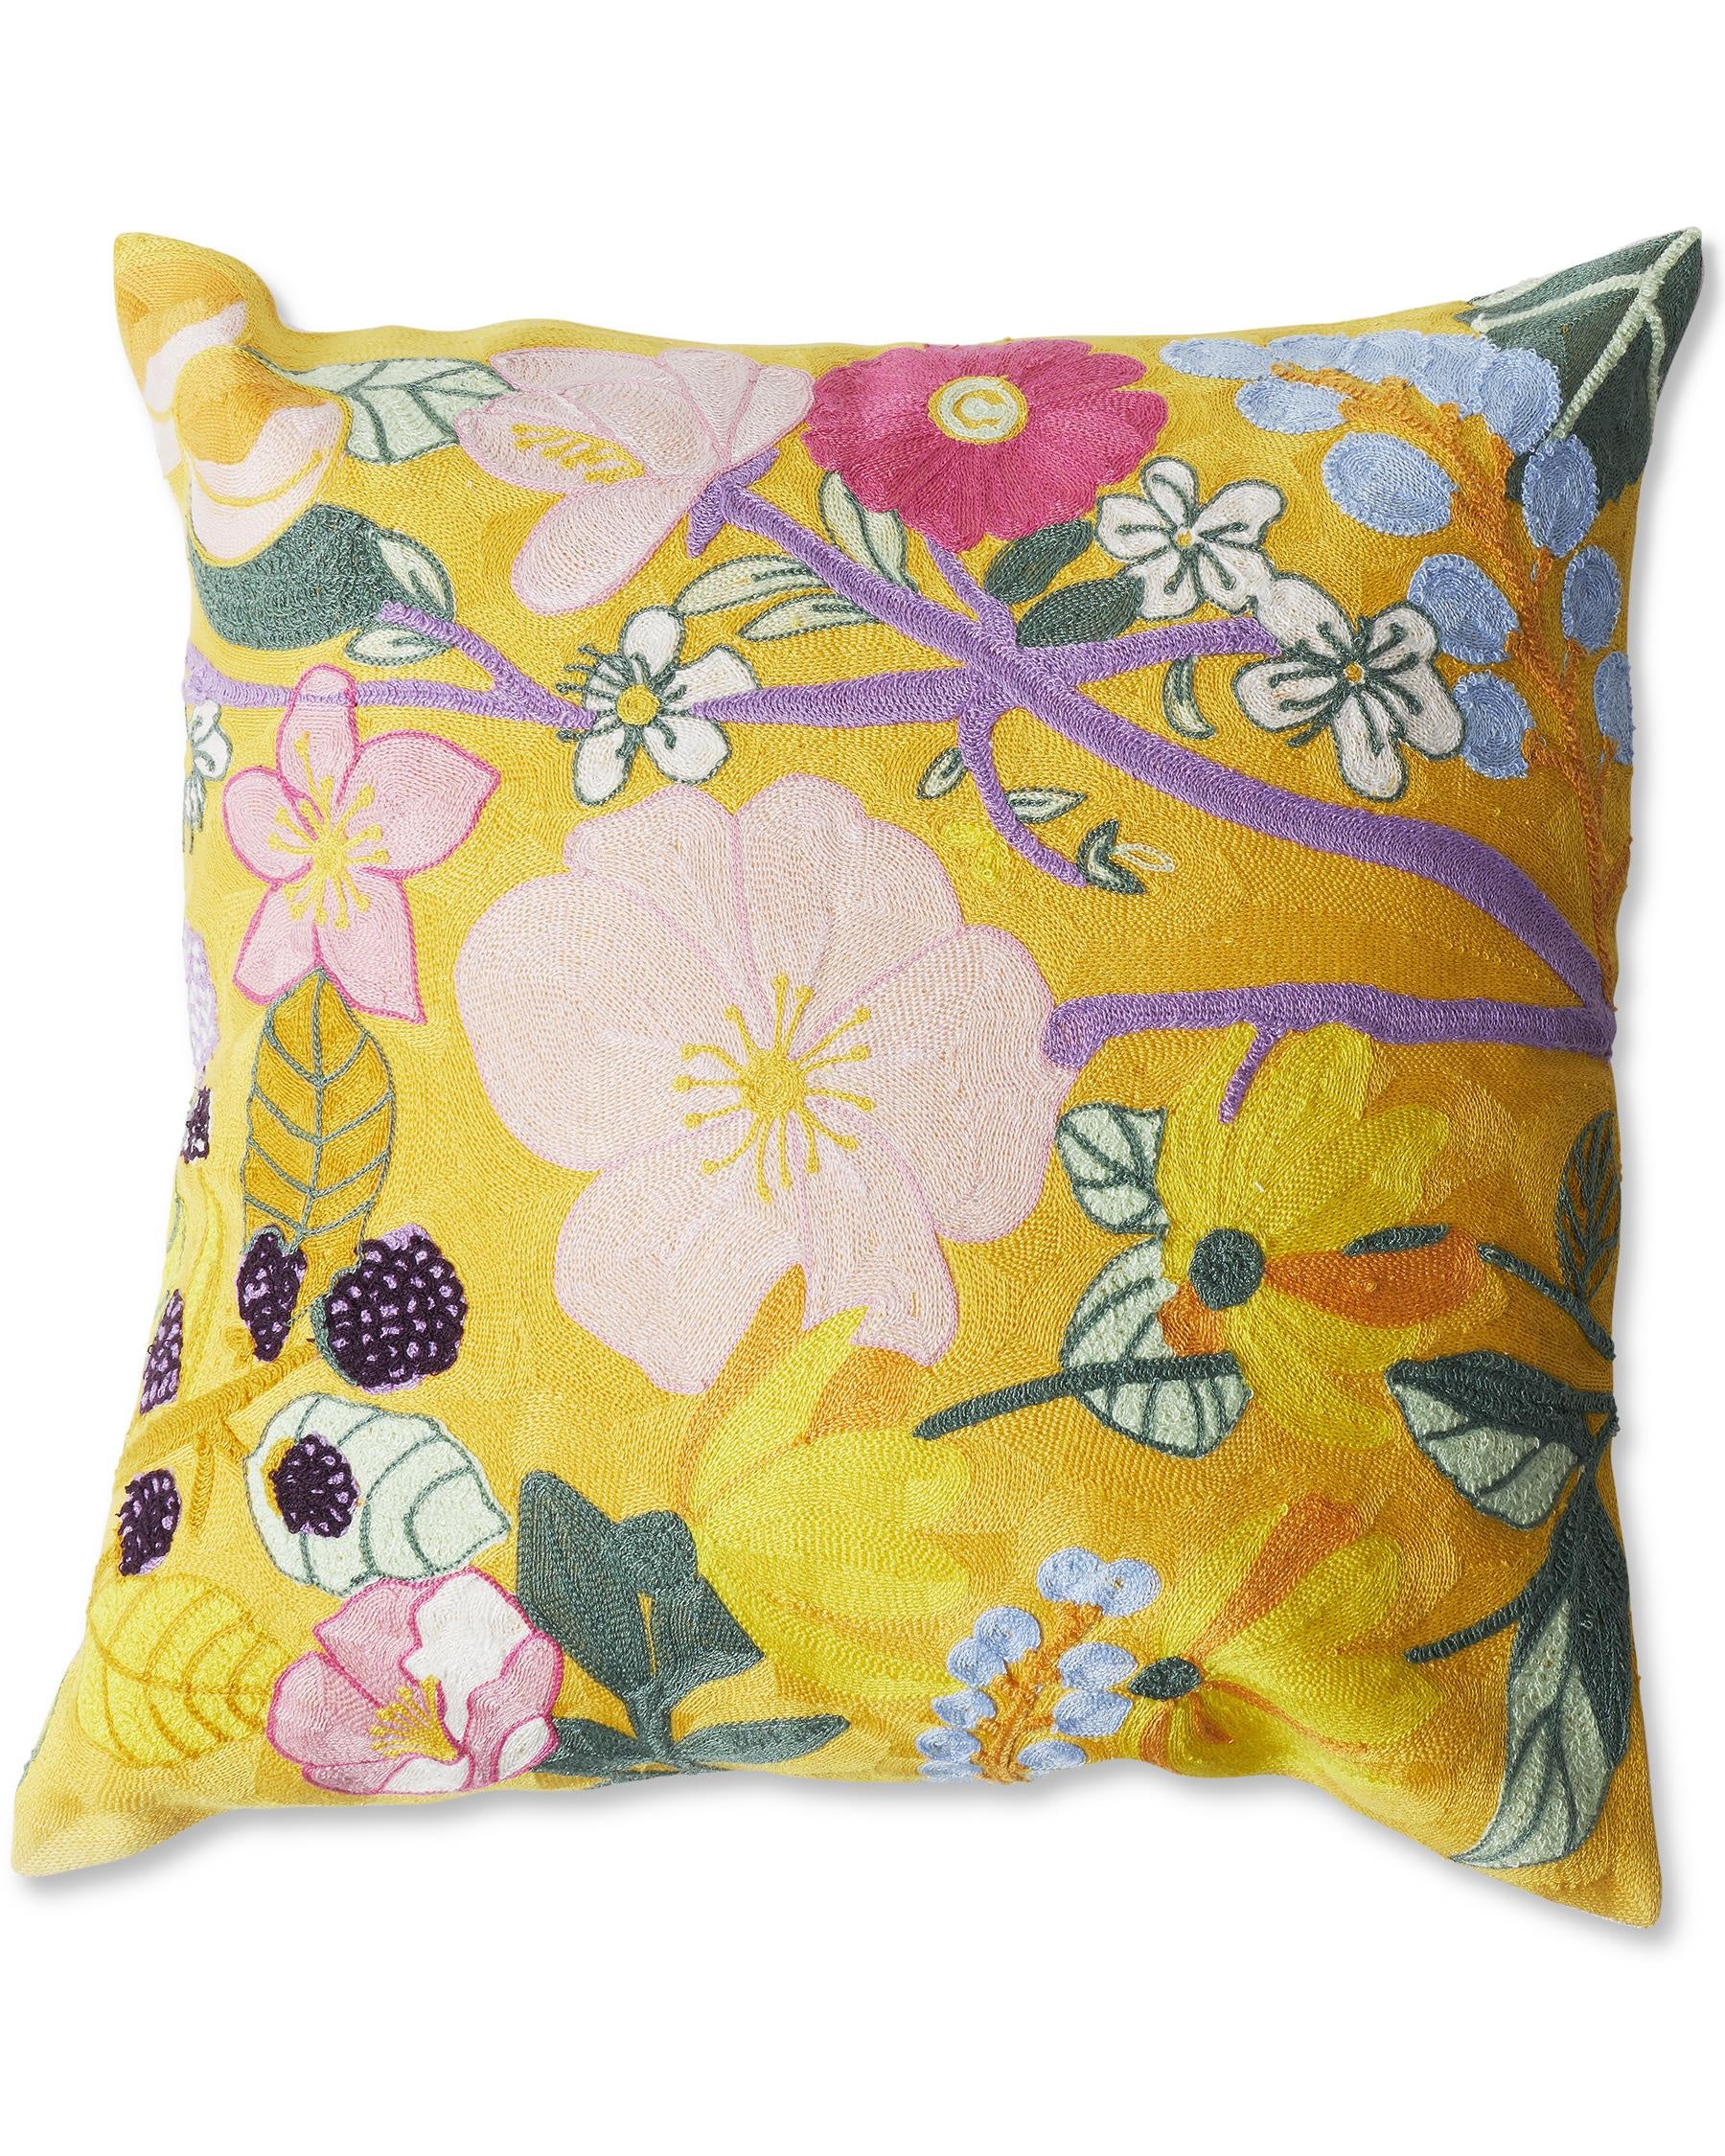 Cushion - Abundance Marigold Embroidery